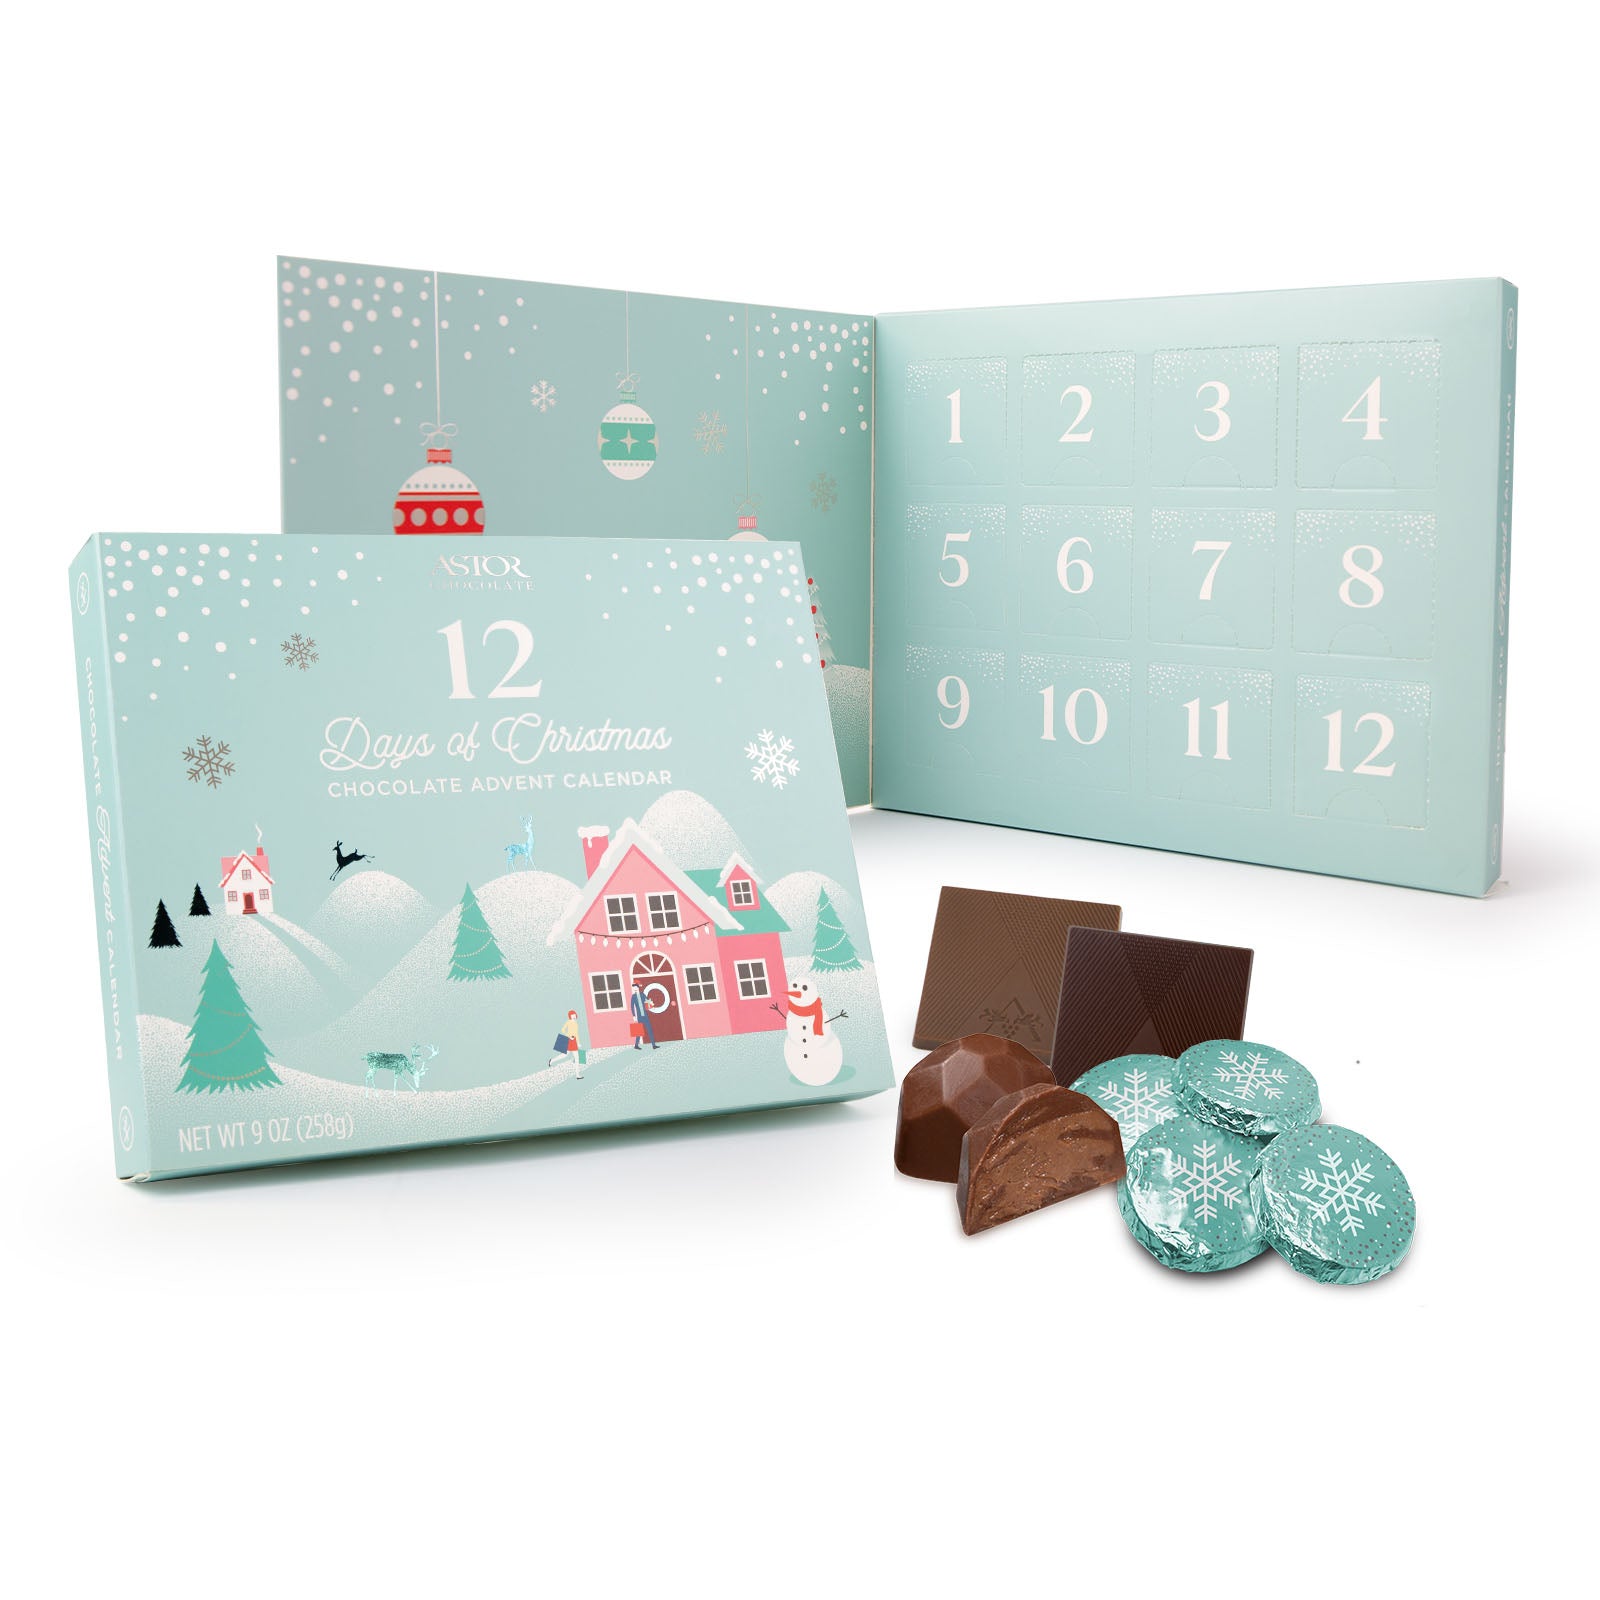 12 Days of Christmas Holiday Advent Calendar – Astor Chocolate